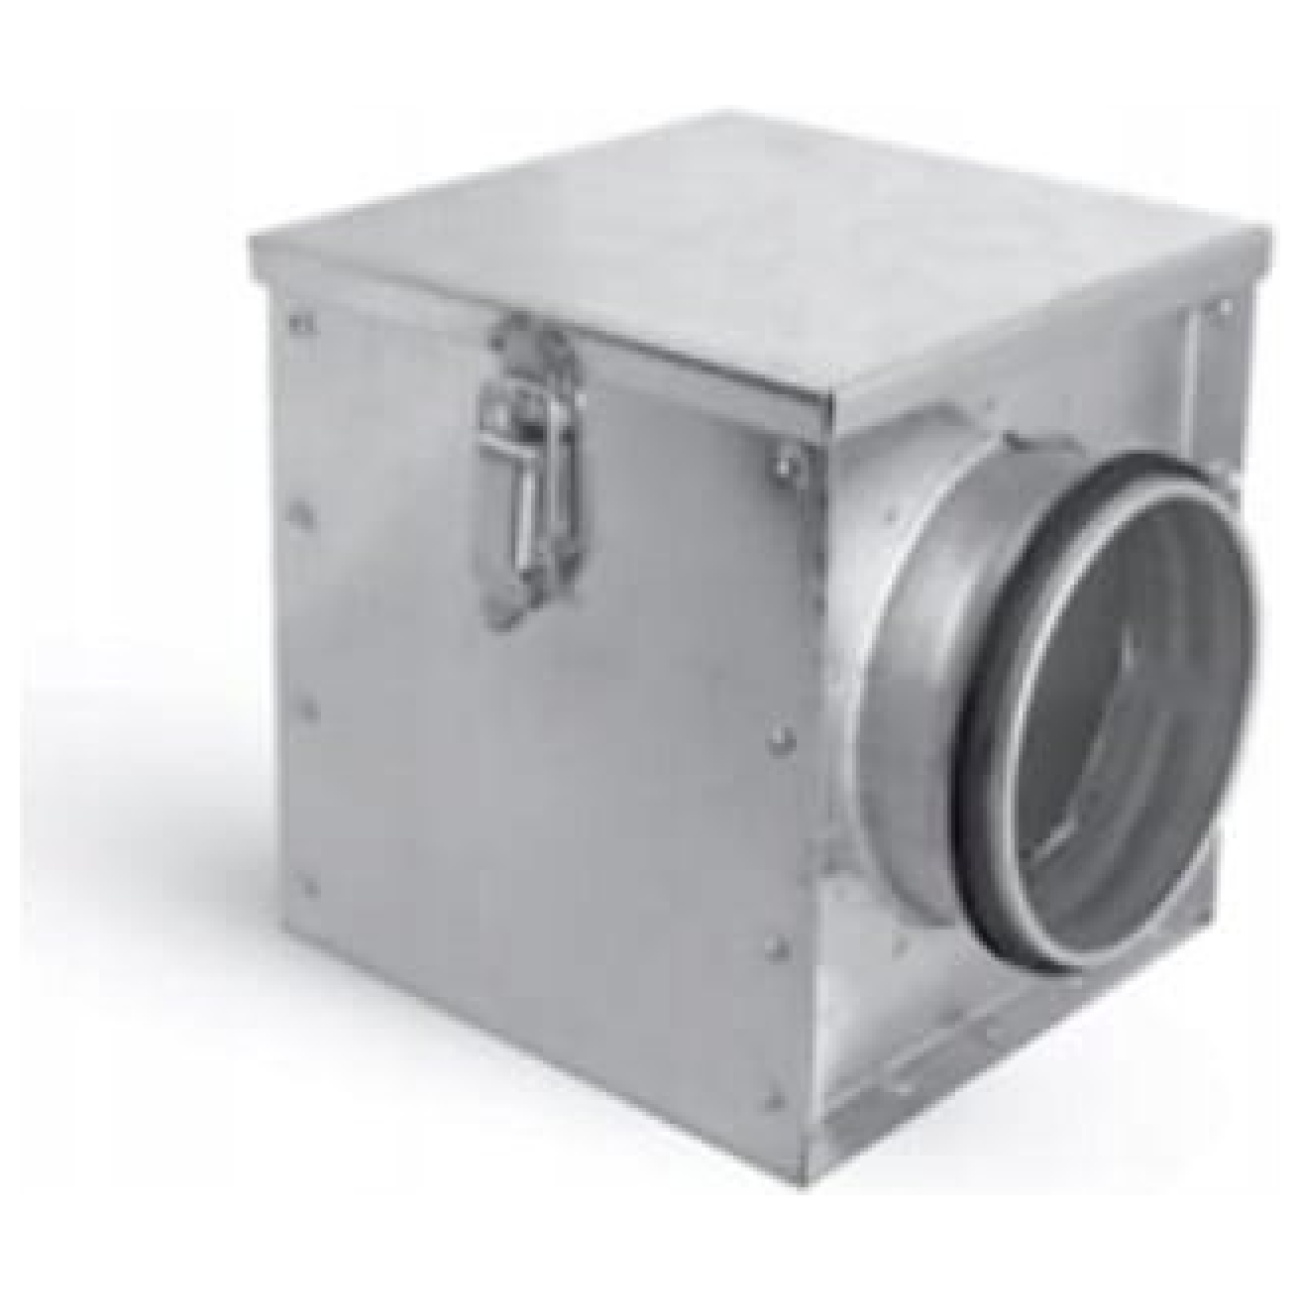 Filtr powietrza kanałowy z kasetą FKK 150 mm EU3 - Forvent FKK-B-150-4